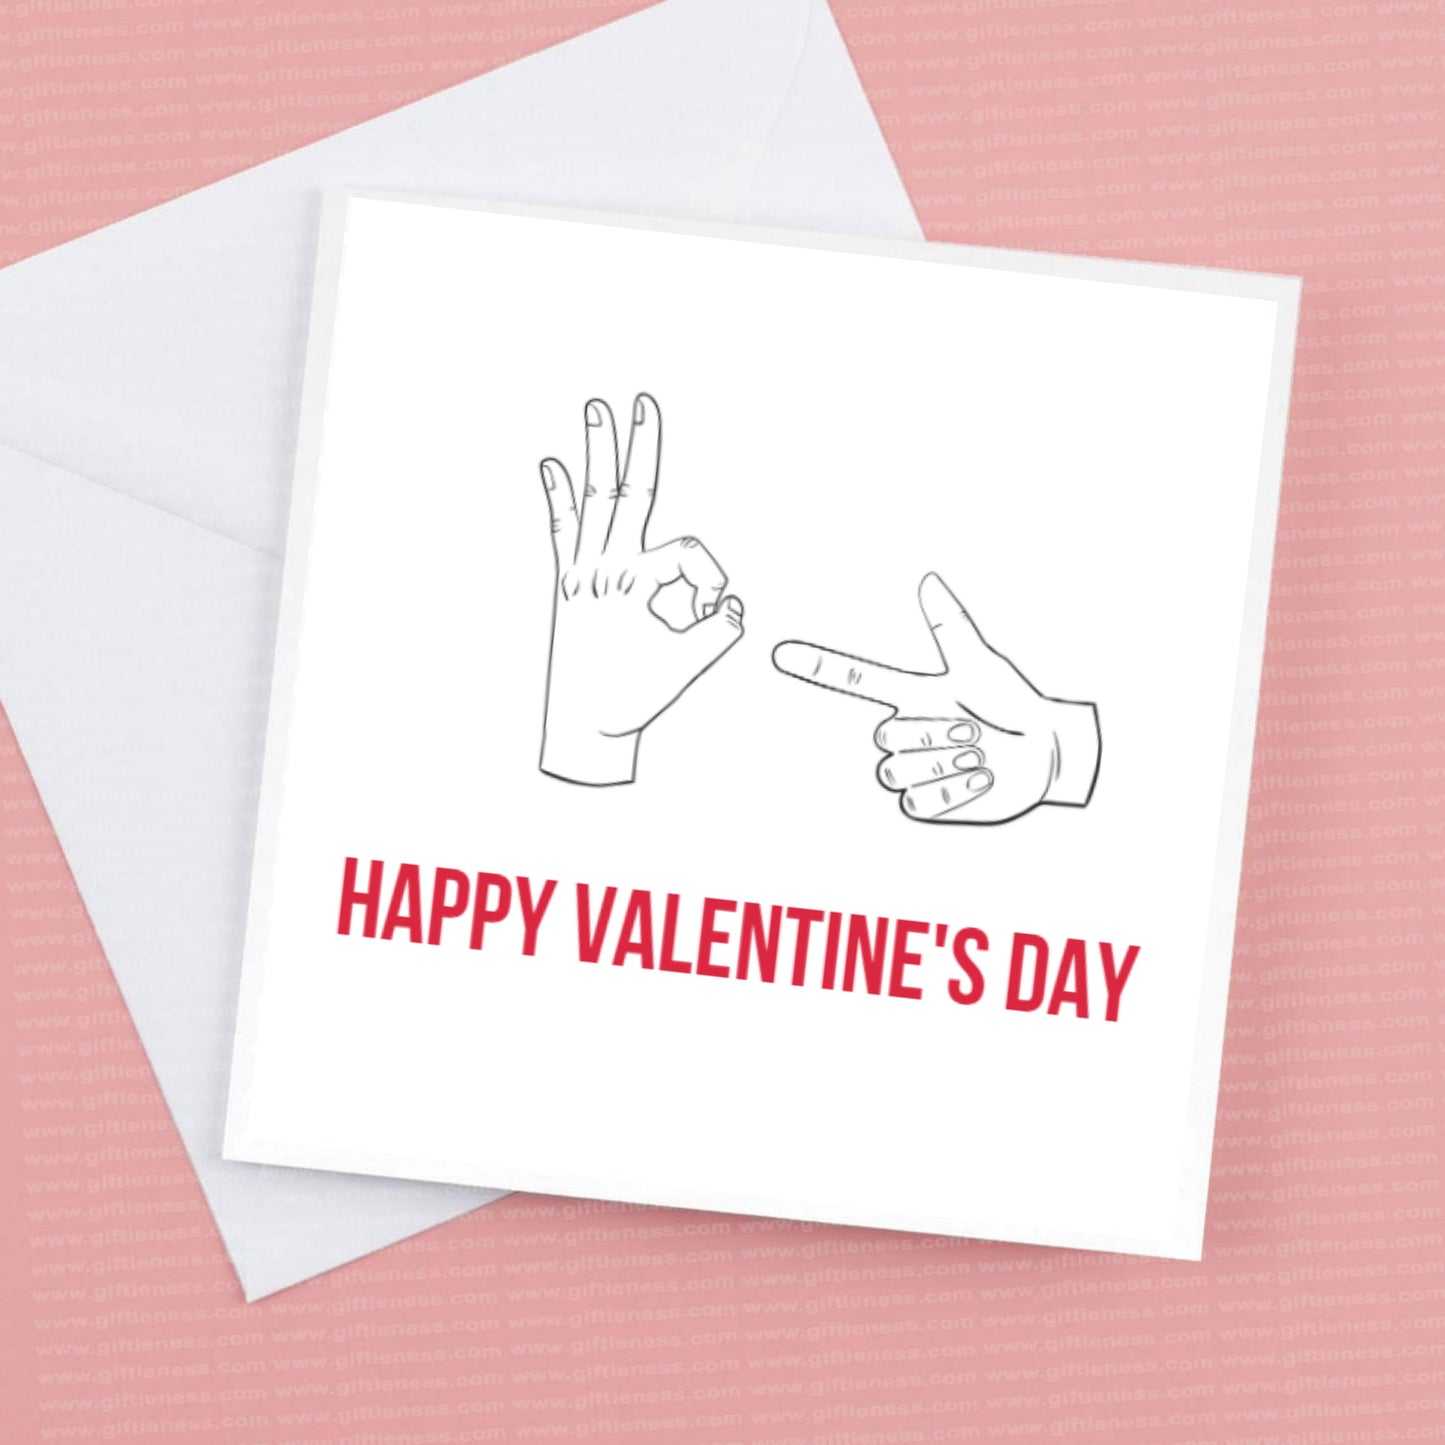 Happy Valentines Day Card - Rude Hand gestures